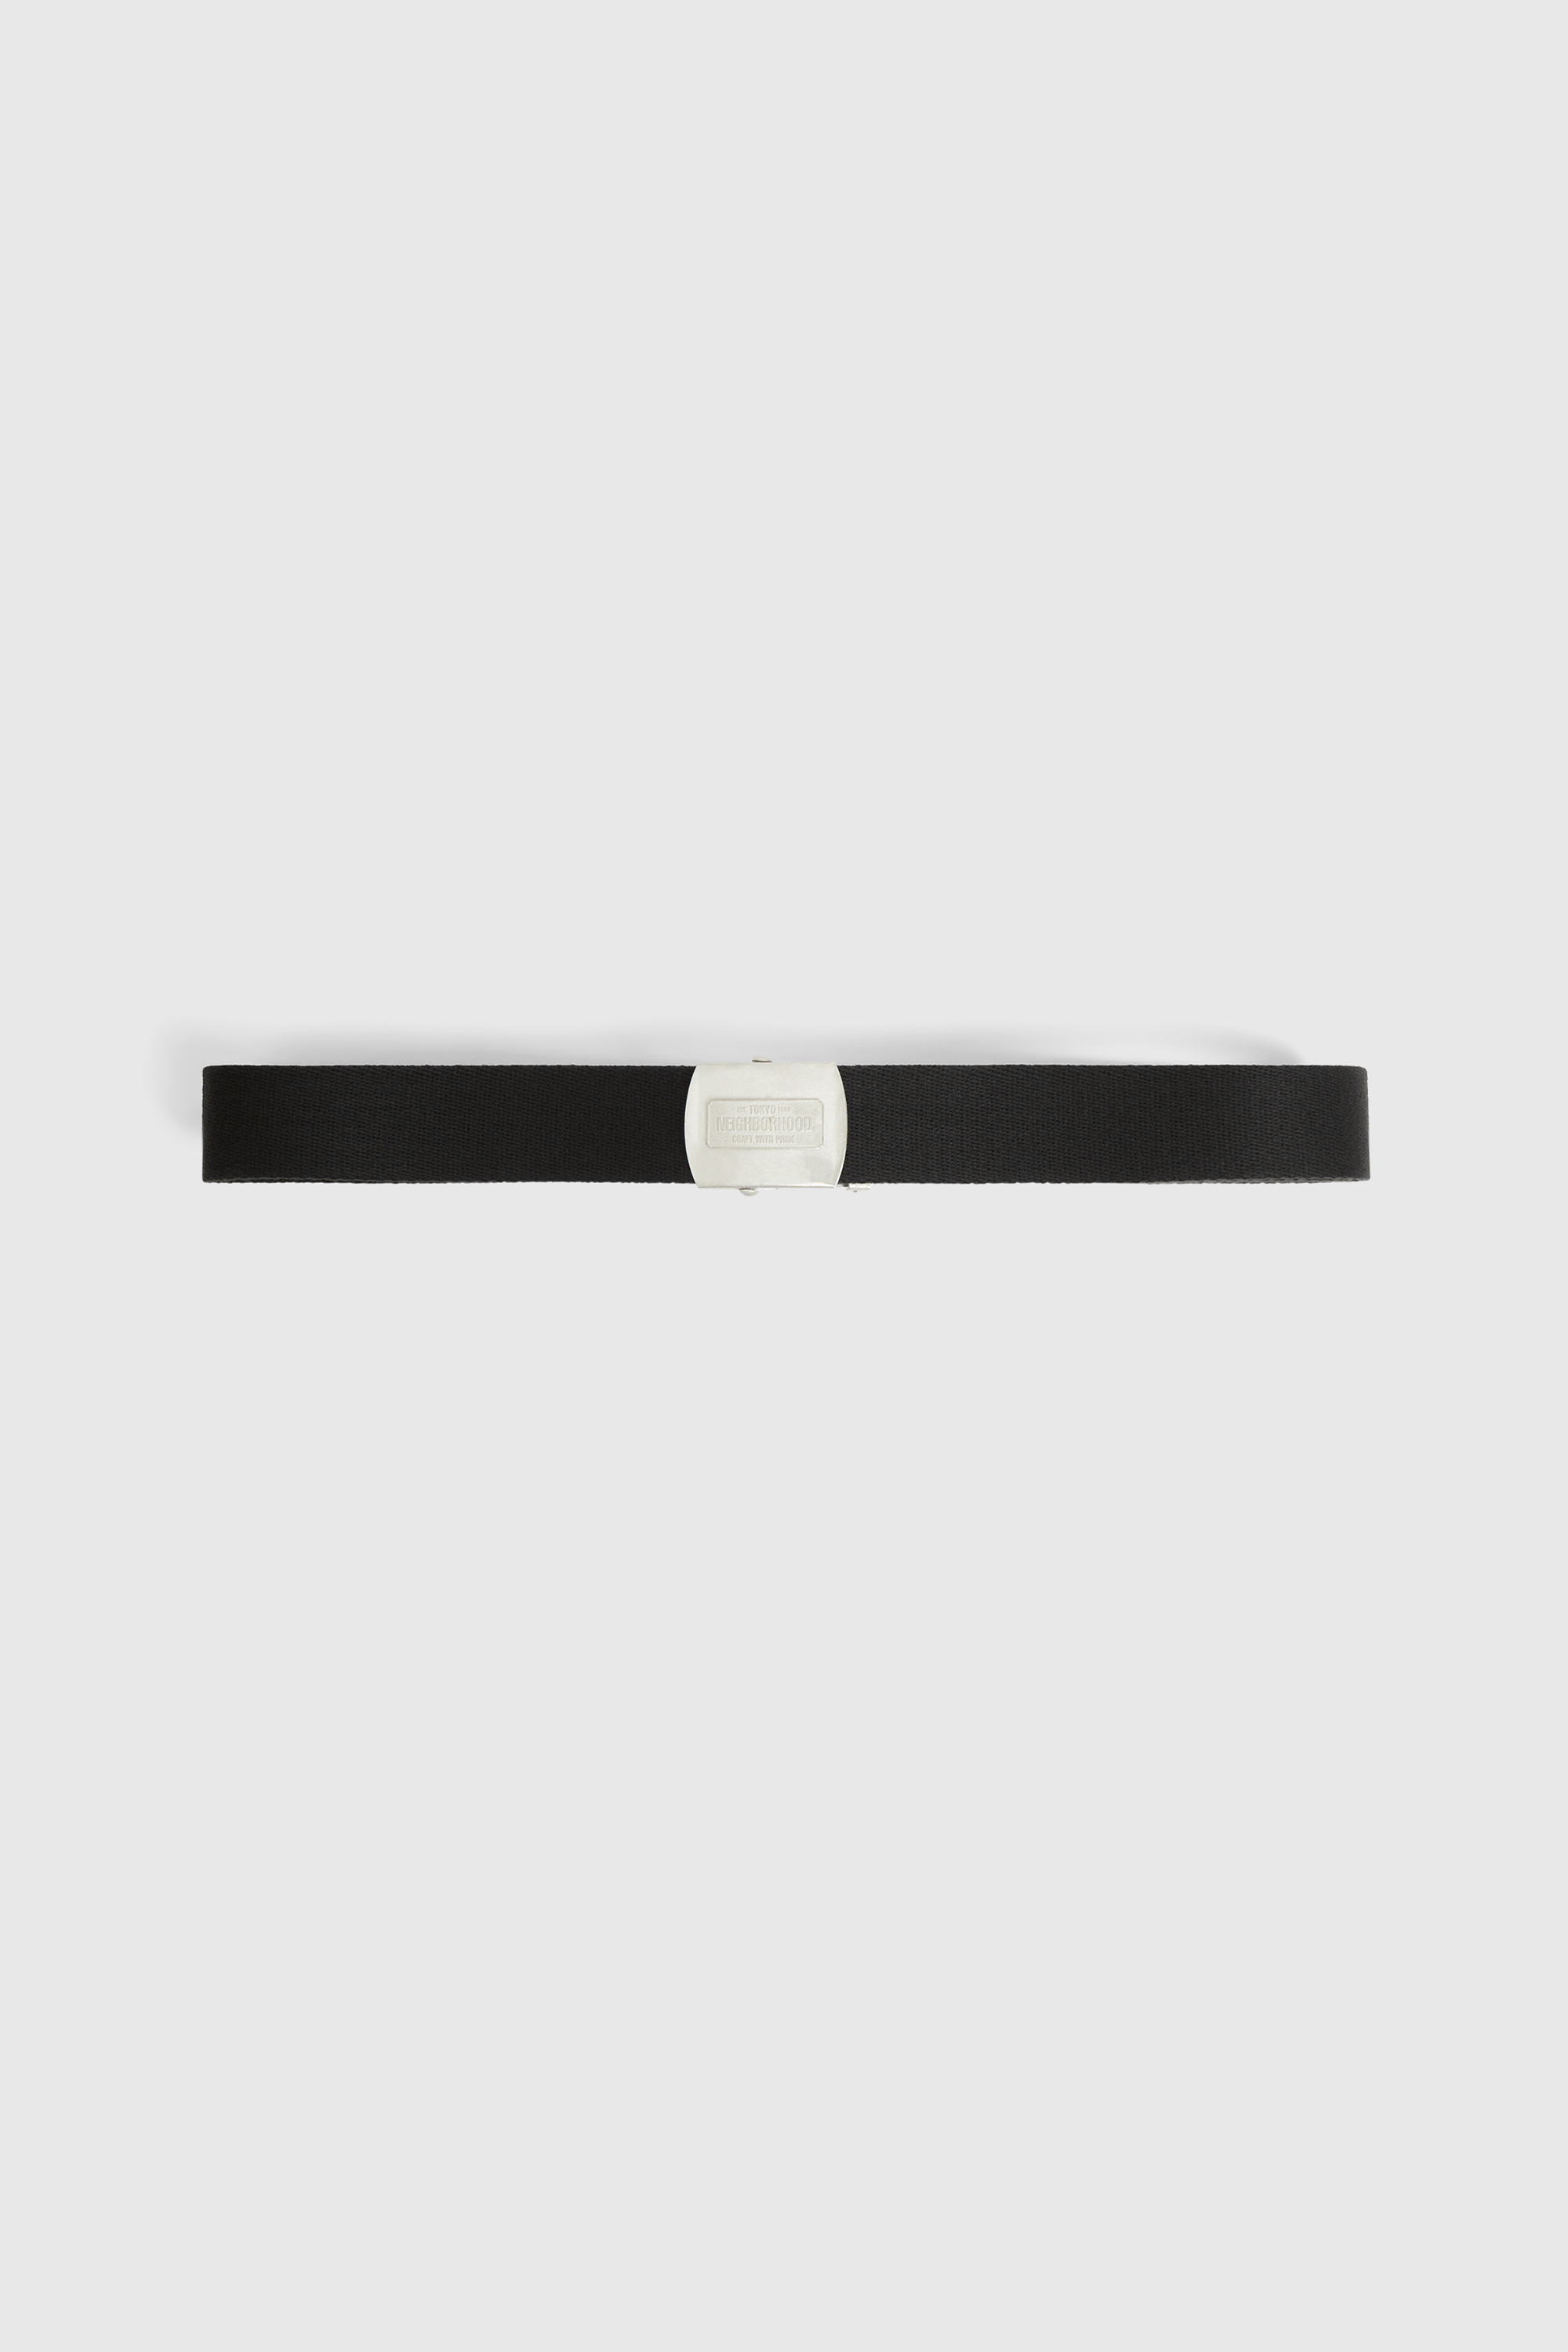 JANDEL Hollow Breathable Steel-bone Abdominal Belt with Six Rows of 13  Buckles Plastic Belt, Black XXL 